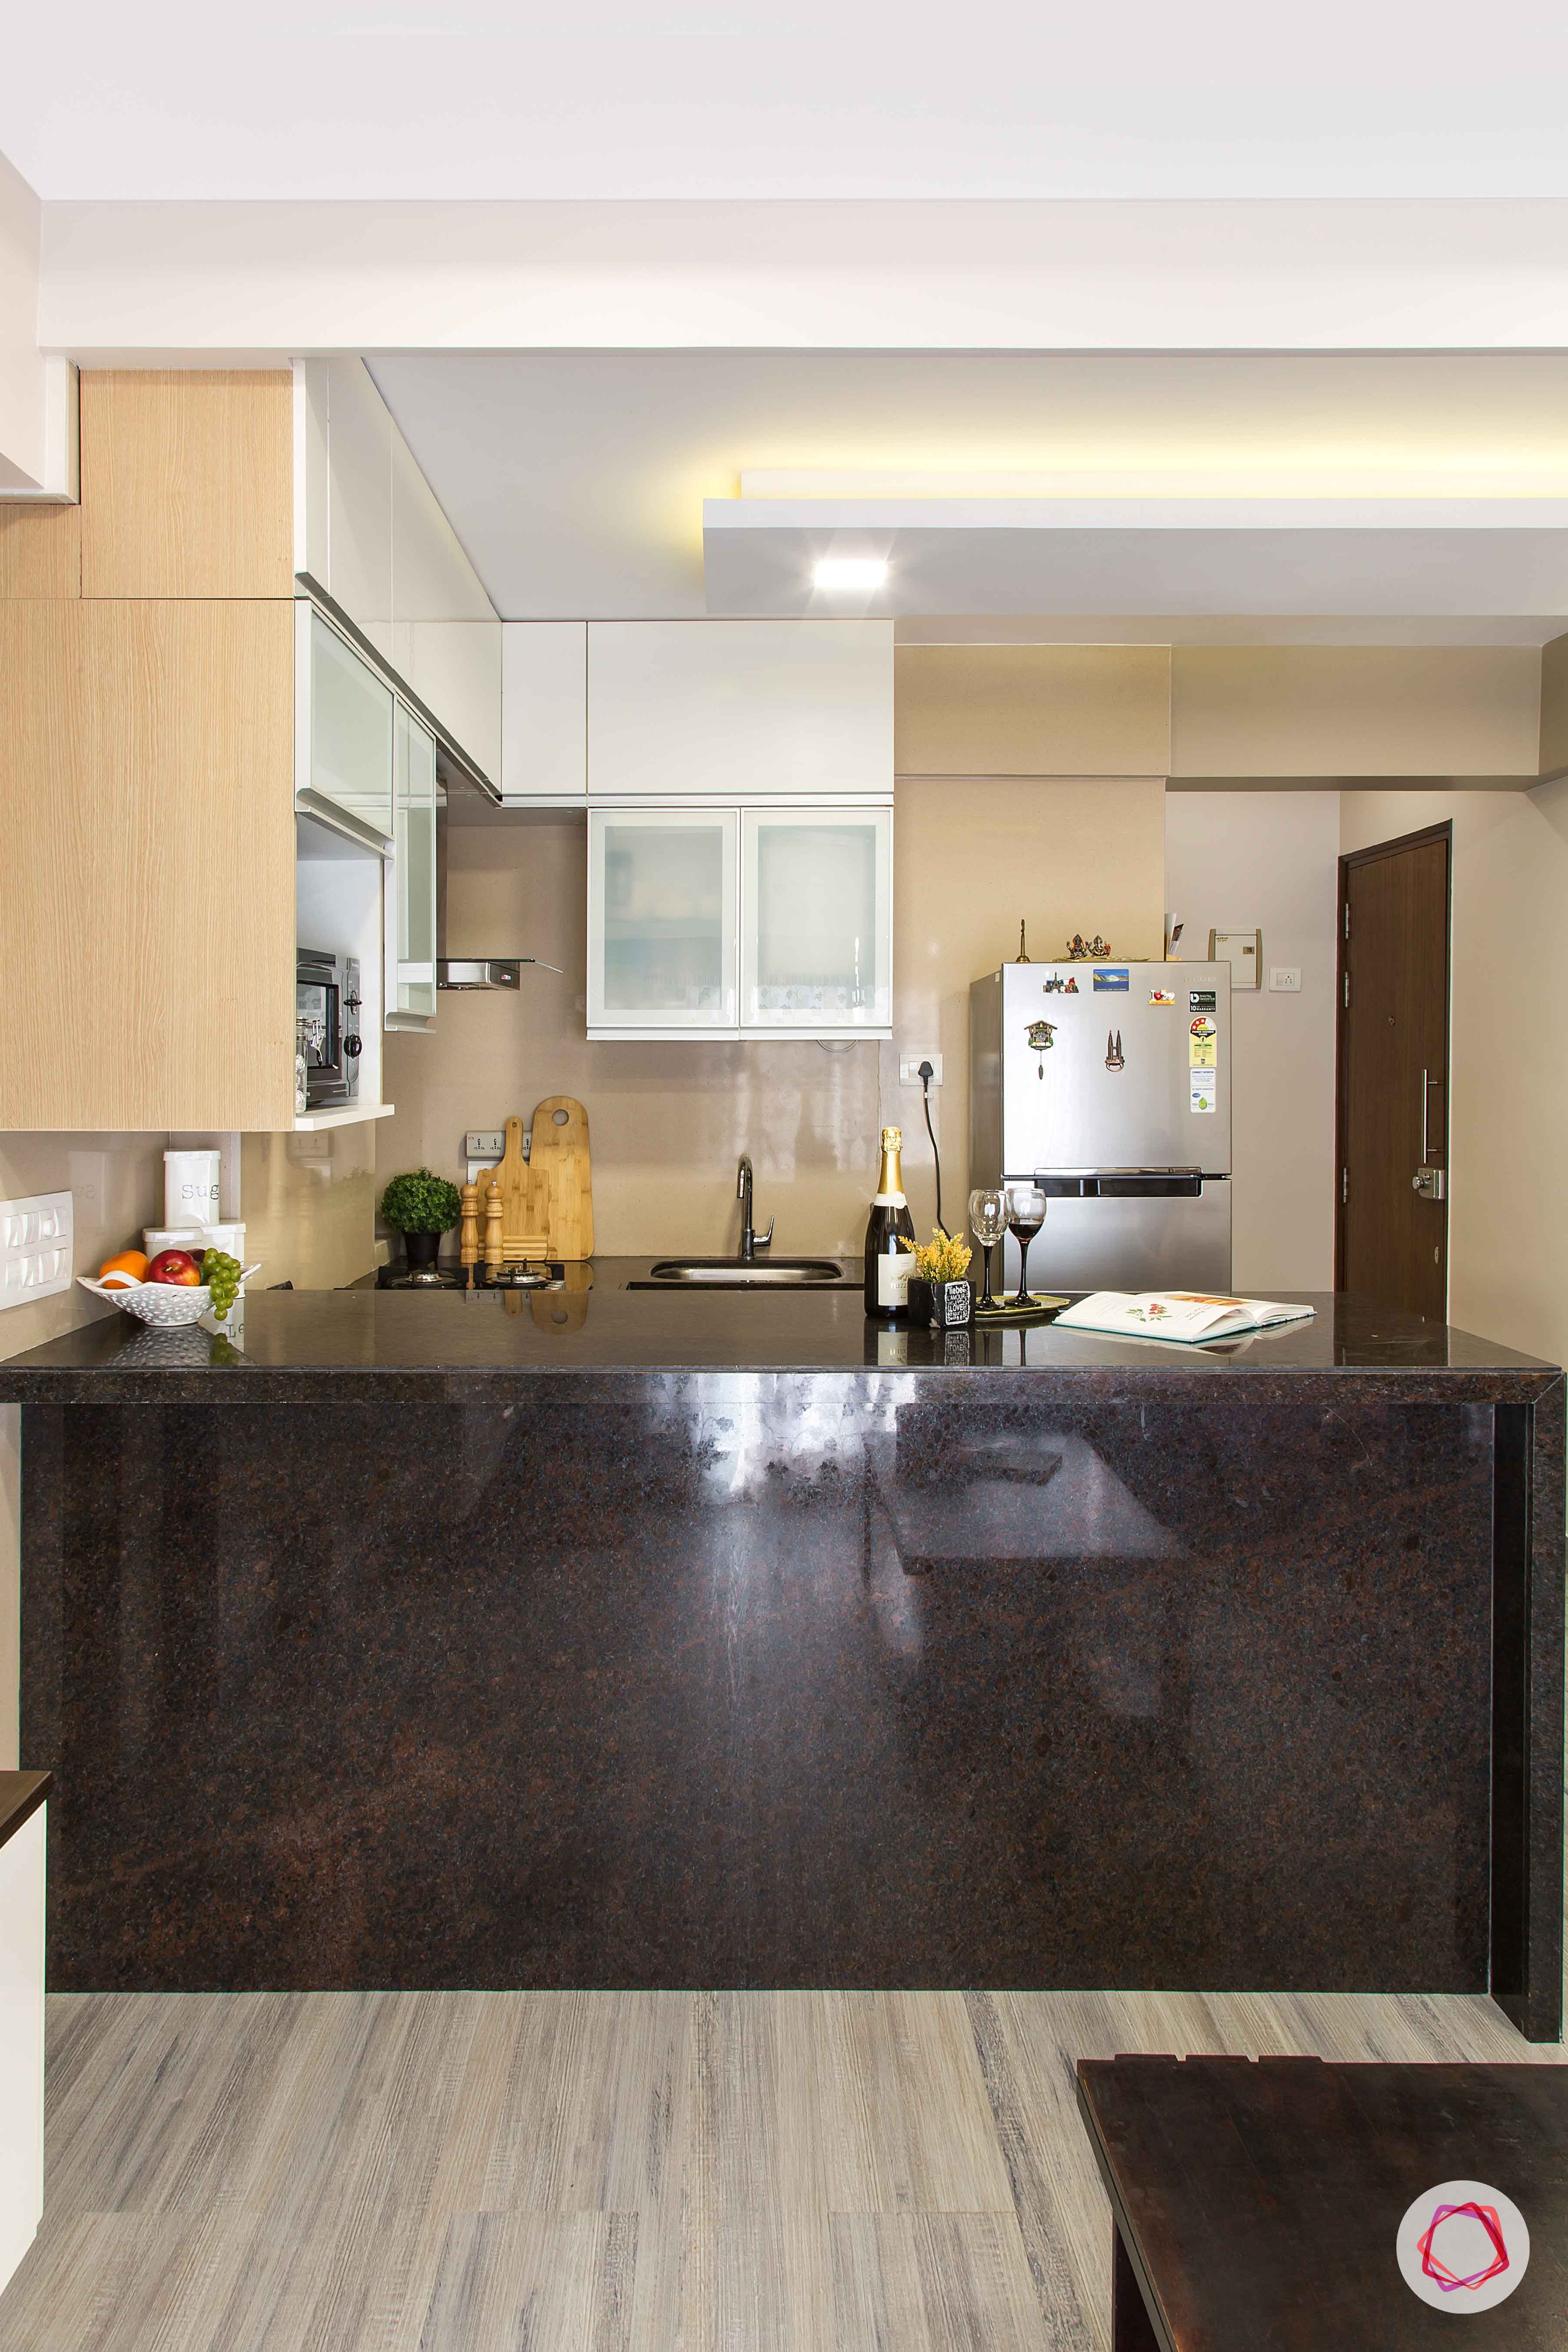 living-room-kitchen-cabinets-fridge
